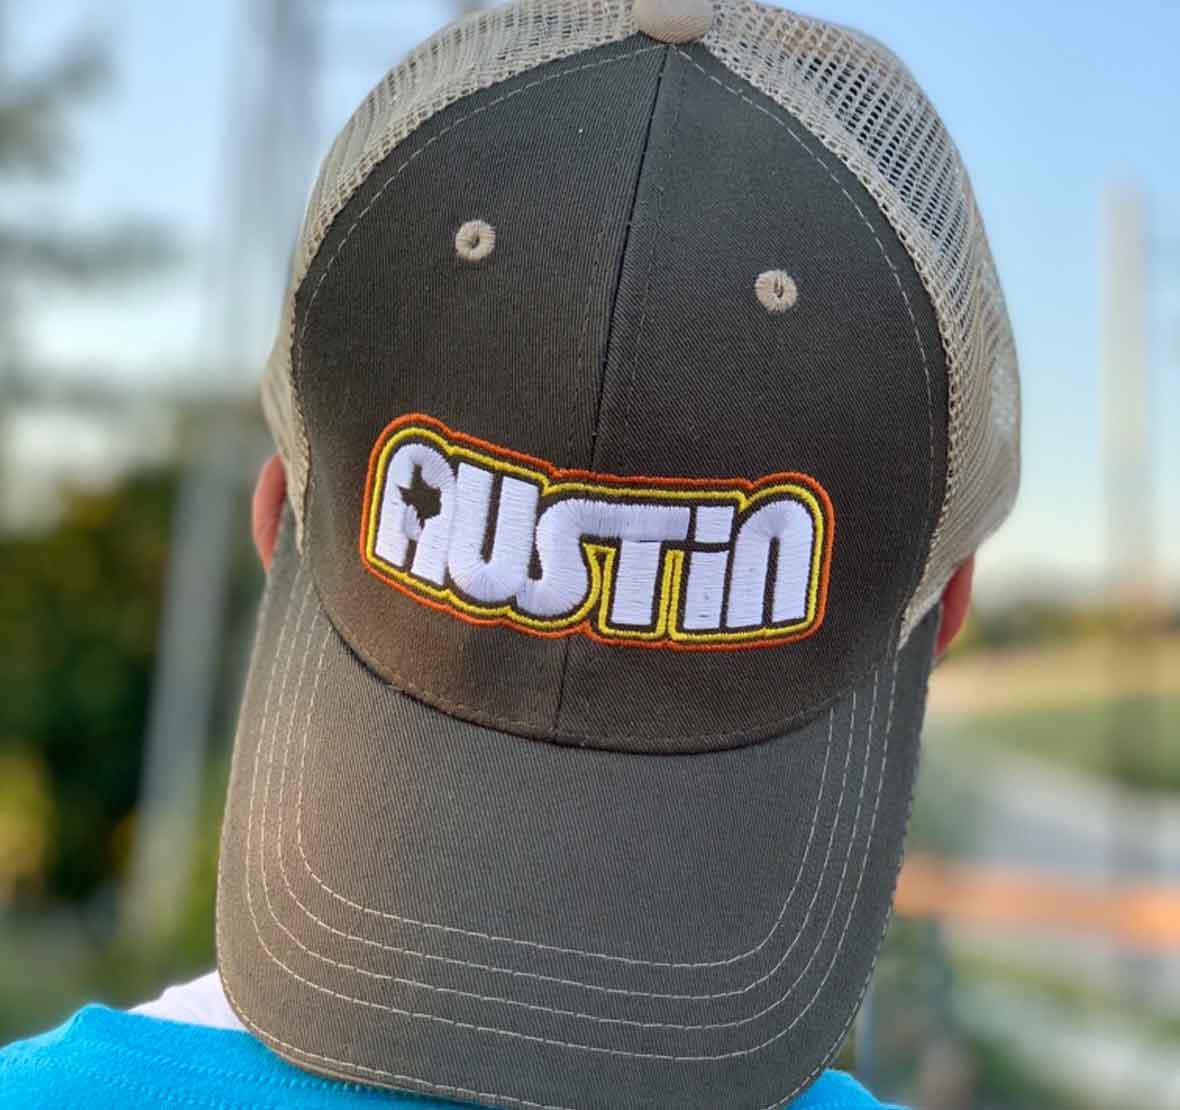 Retro Austin Trucker Cap by Gusto Graphic Tees - Texas cap